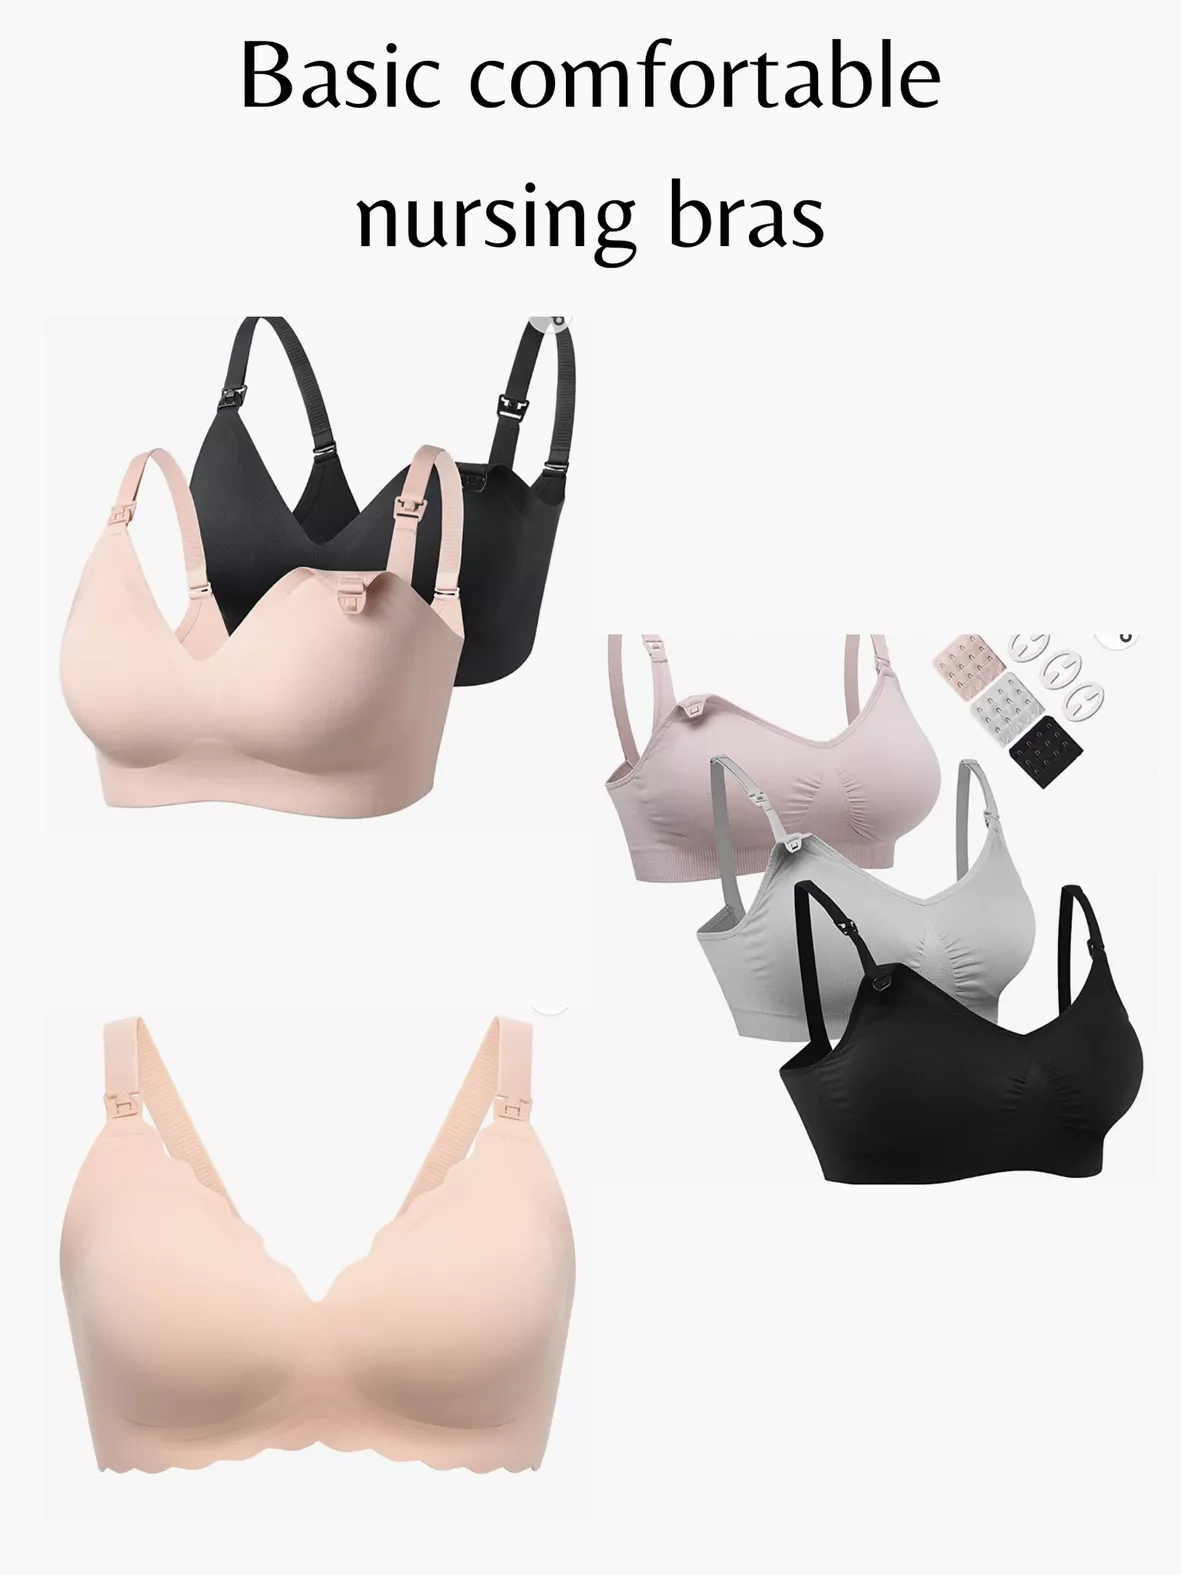 Comfortable nursing bras